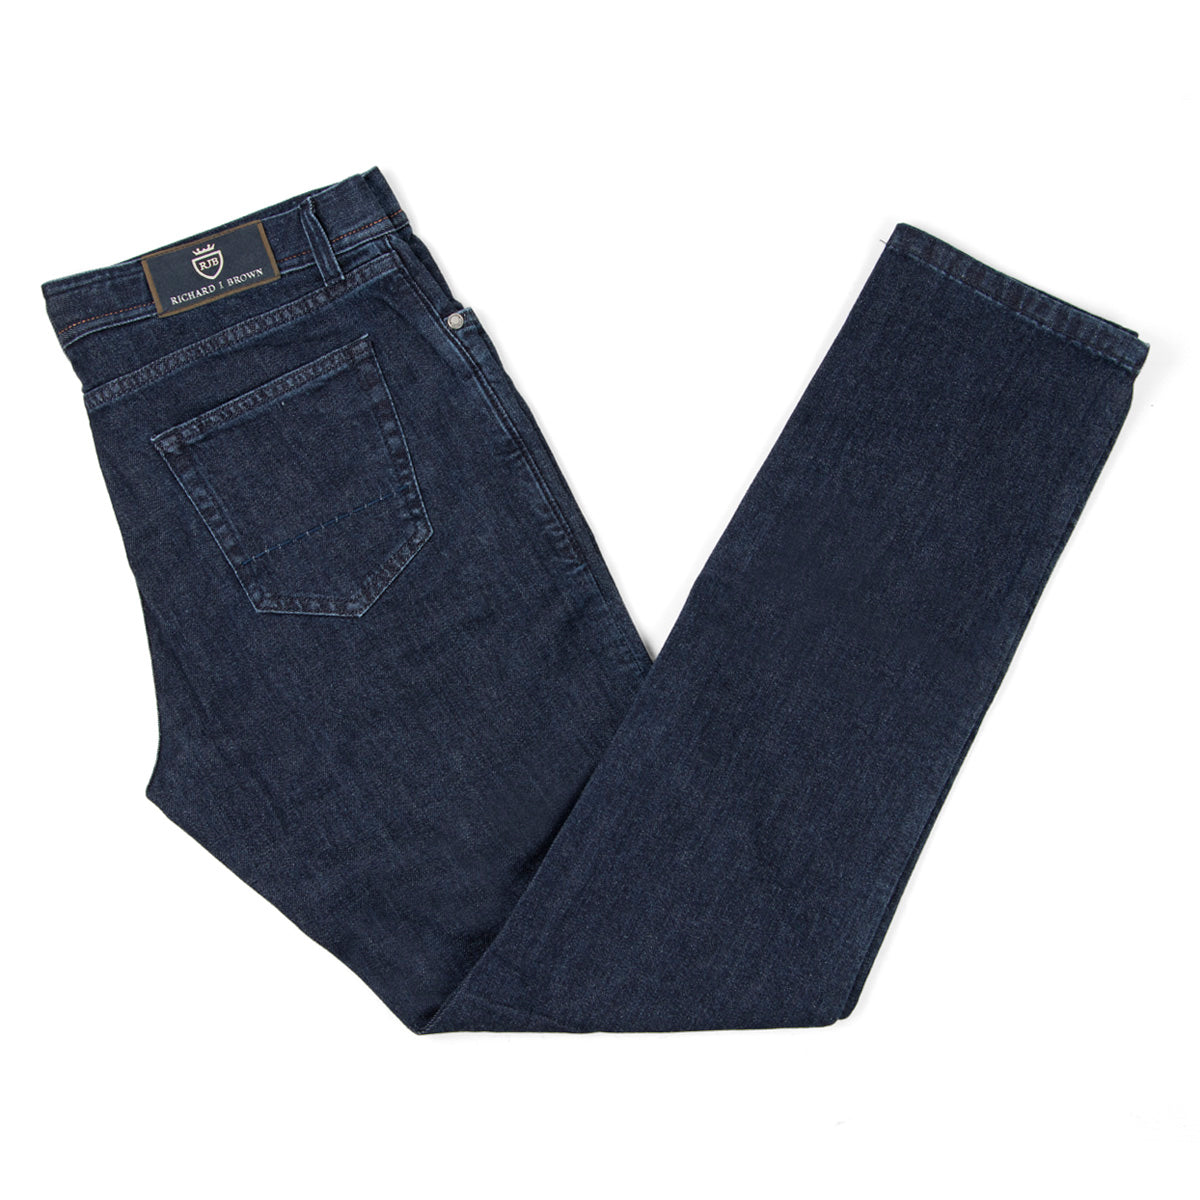 Dark Wash Cashmere Denim 'Milano' Regular Fit Jeans  Richard J. Brown   